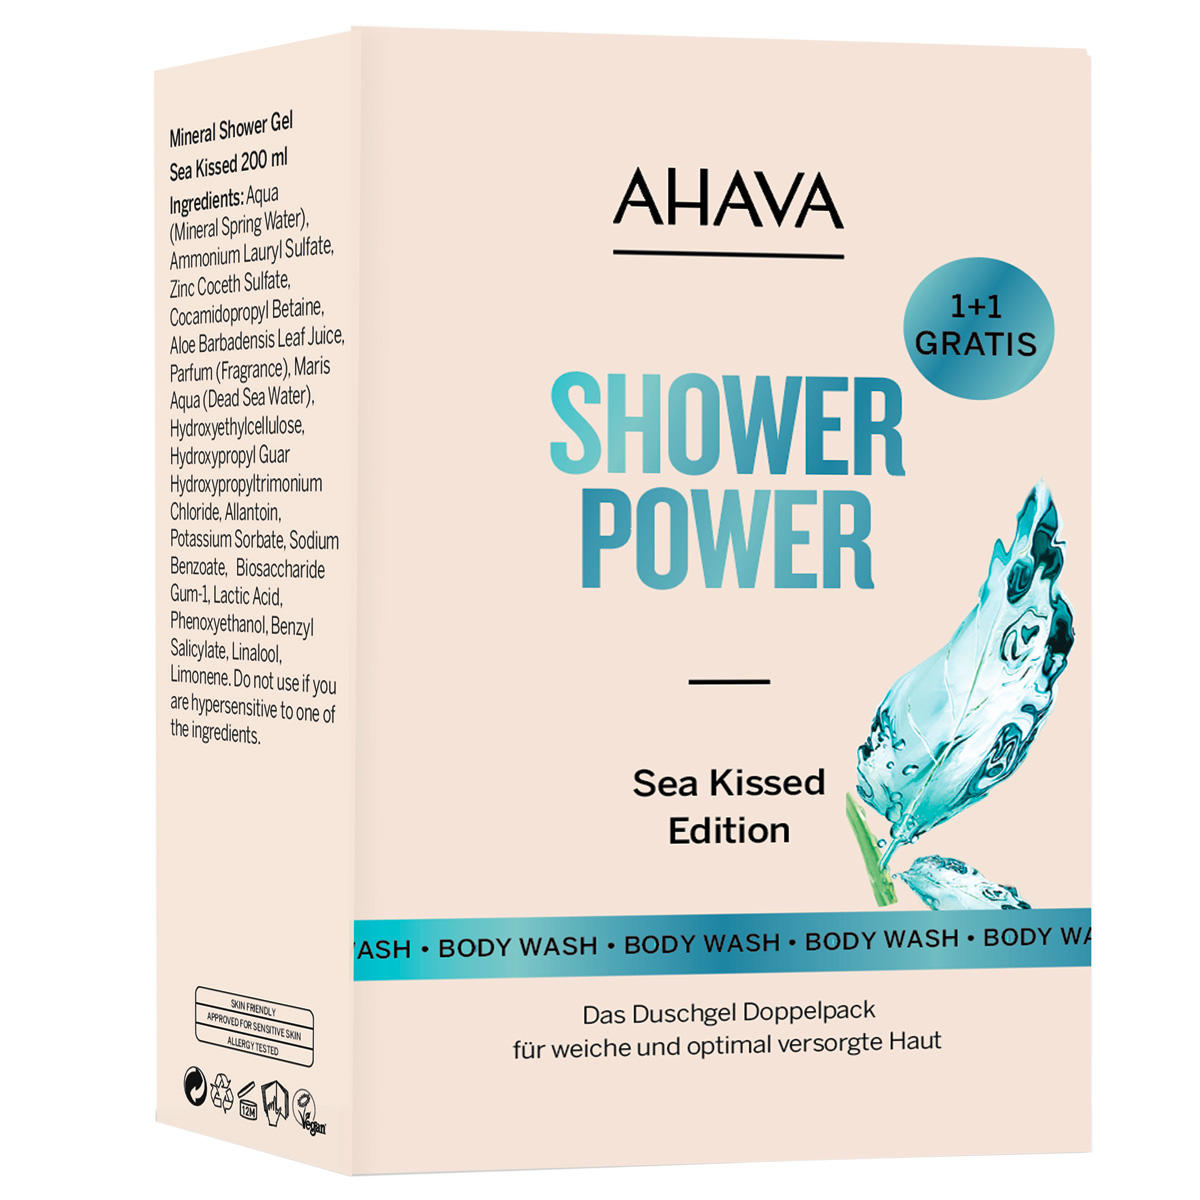 AHAVA Shower Power Sea Kissed Edition Duo Kit 2 x 200 ml - 1